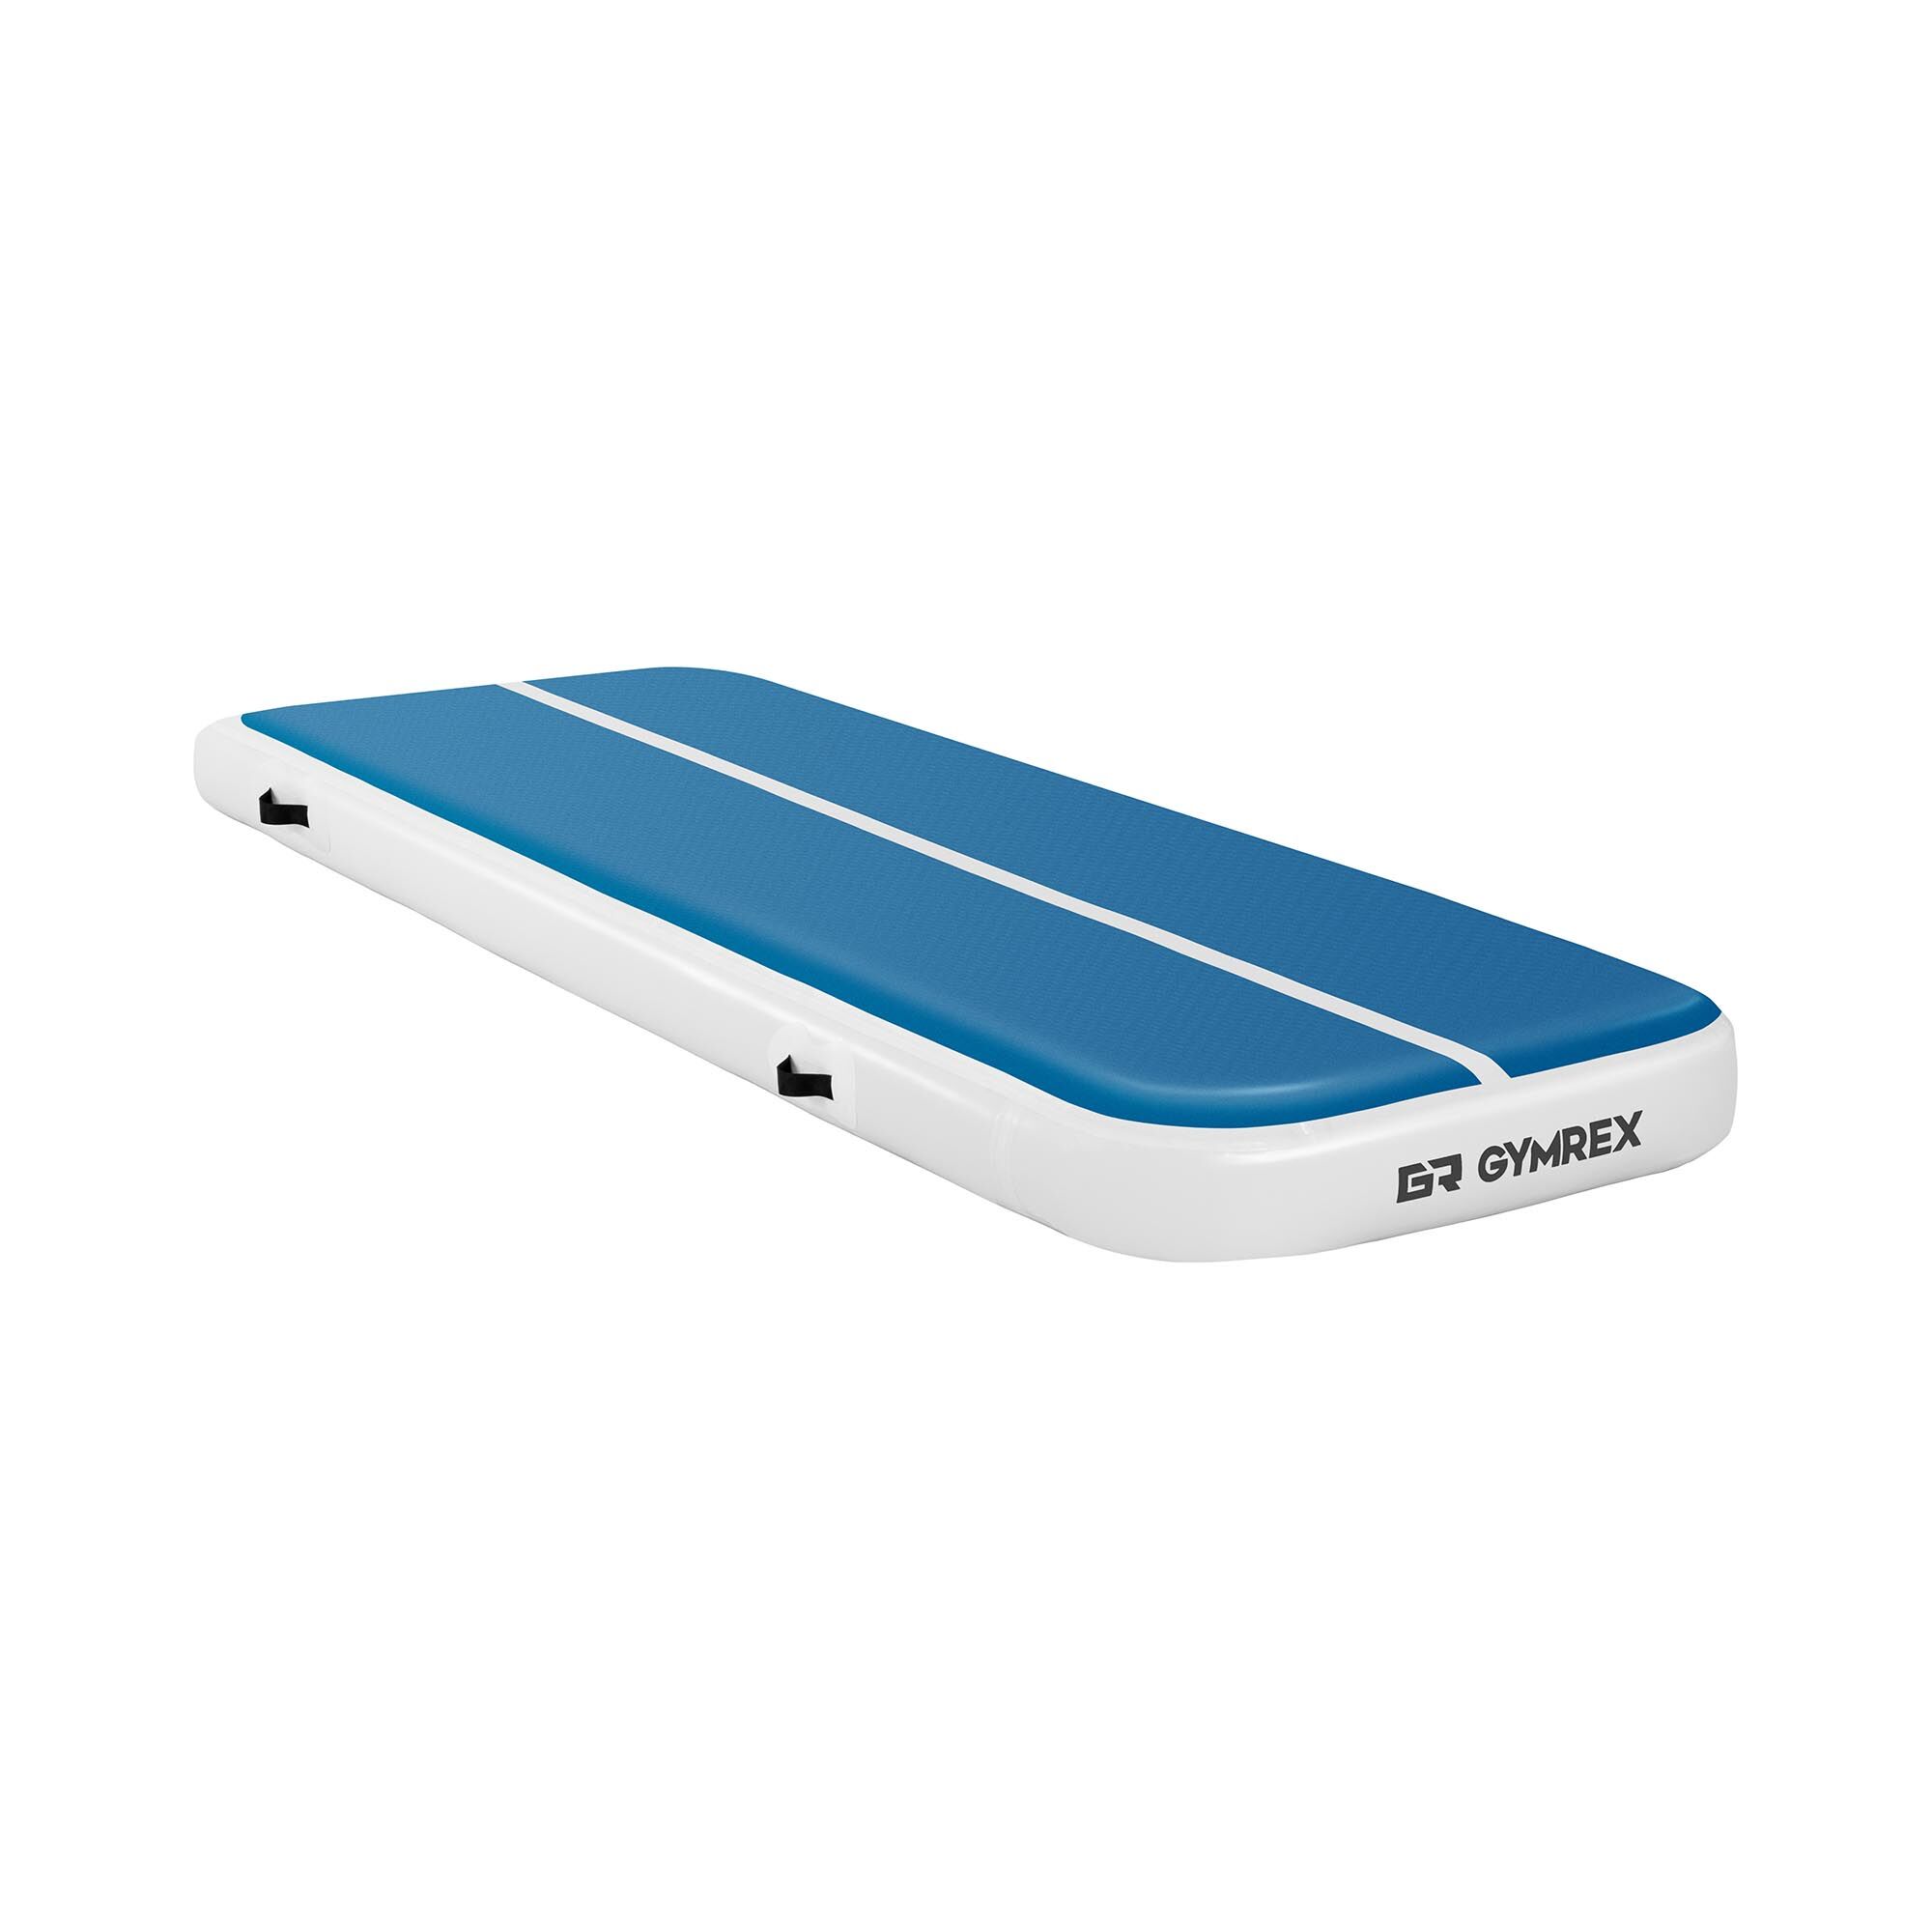 Gymrex Air track - 300 x 100 x 20 cm - 150 kg - Bleu/blanc GR-ATM4